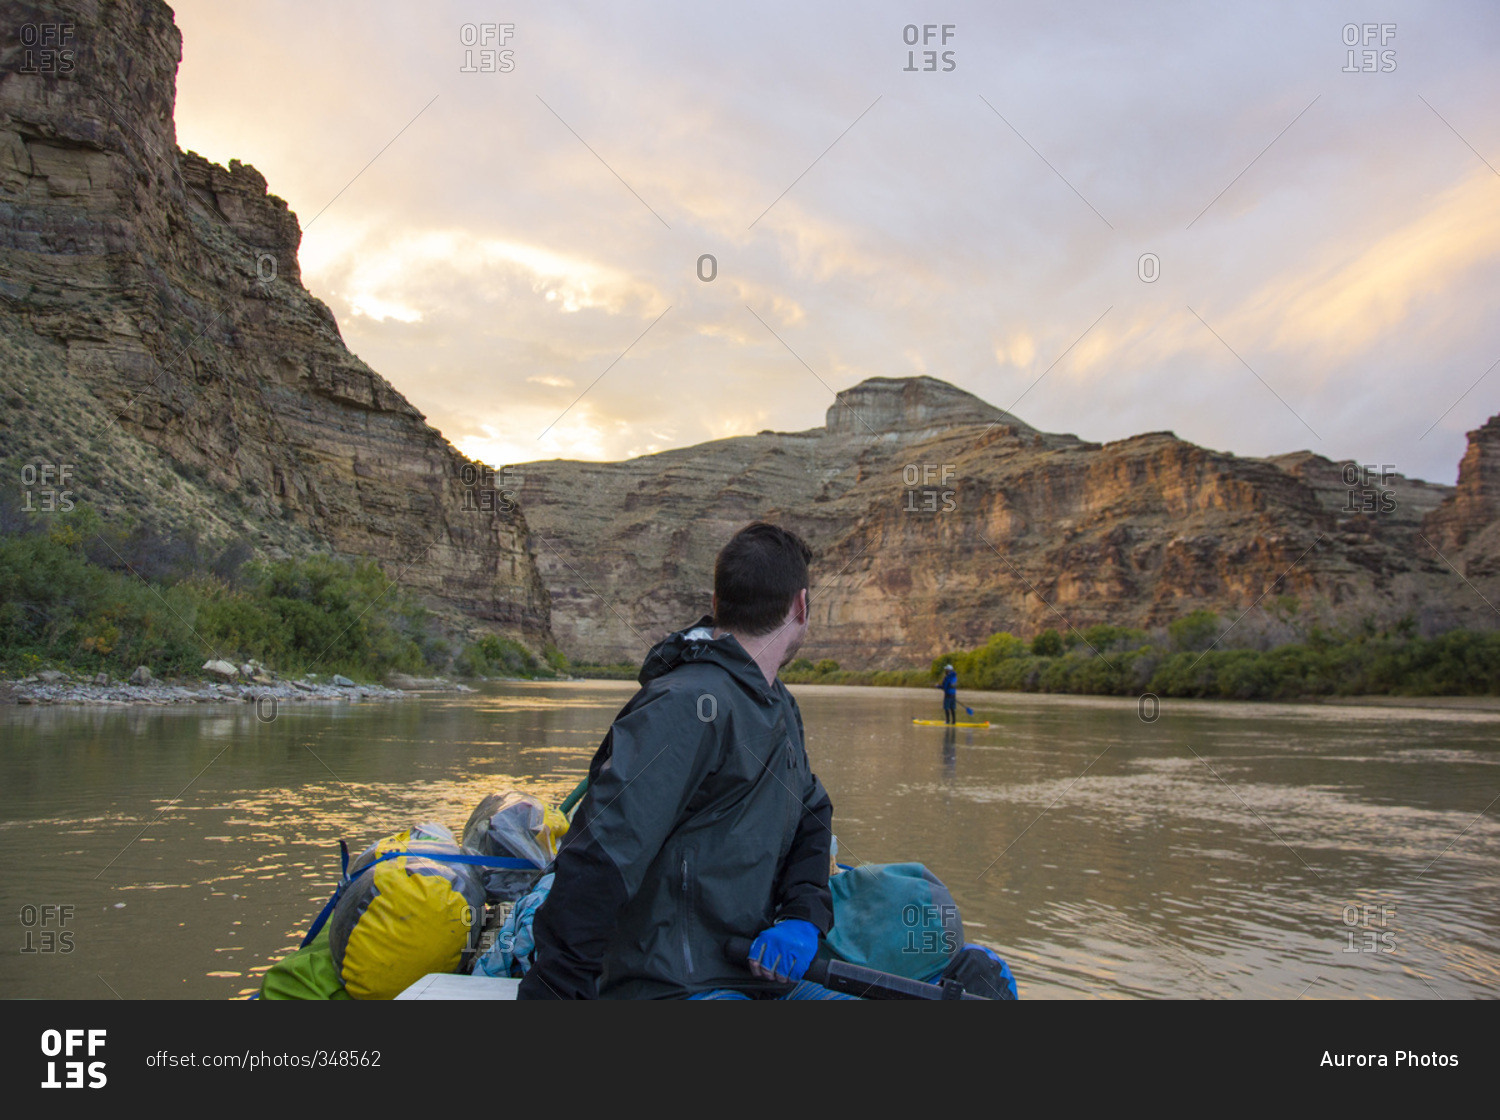 Rafting in Desolation and Gray Canyons, Green River, Utah